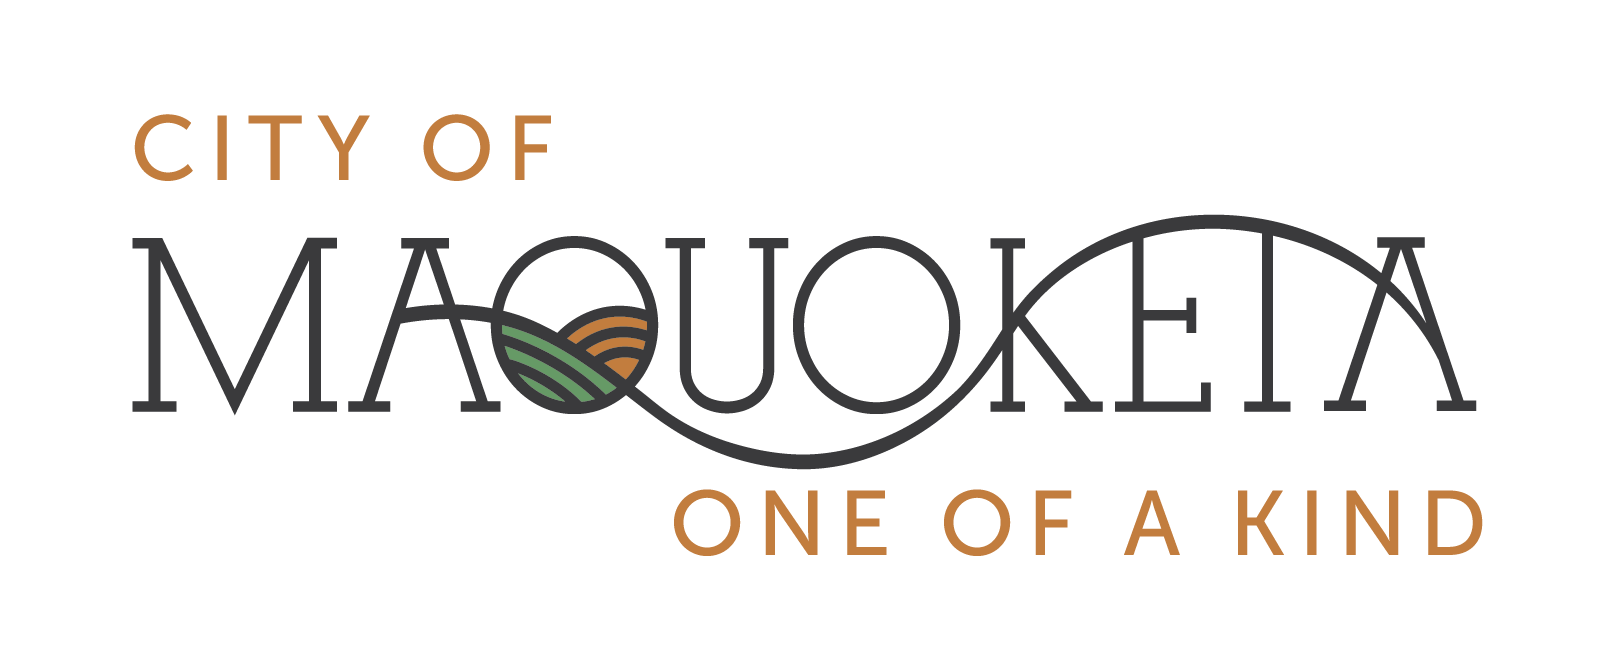 City of Maquoketa Slide Image